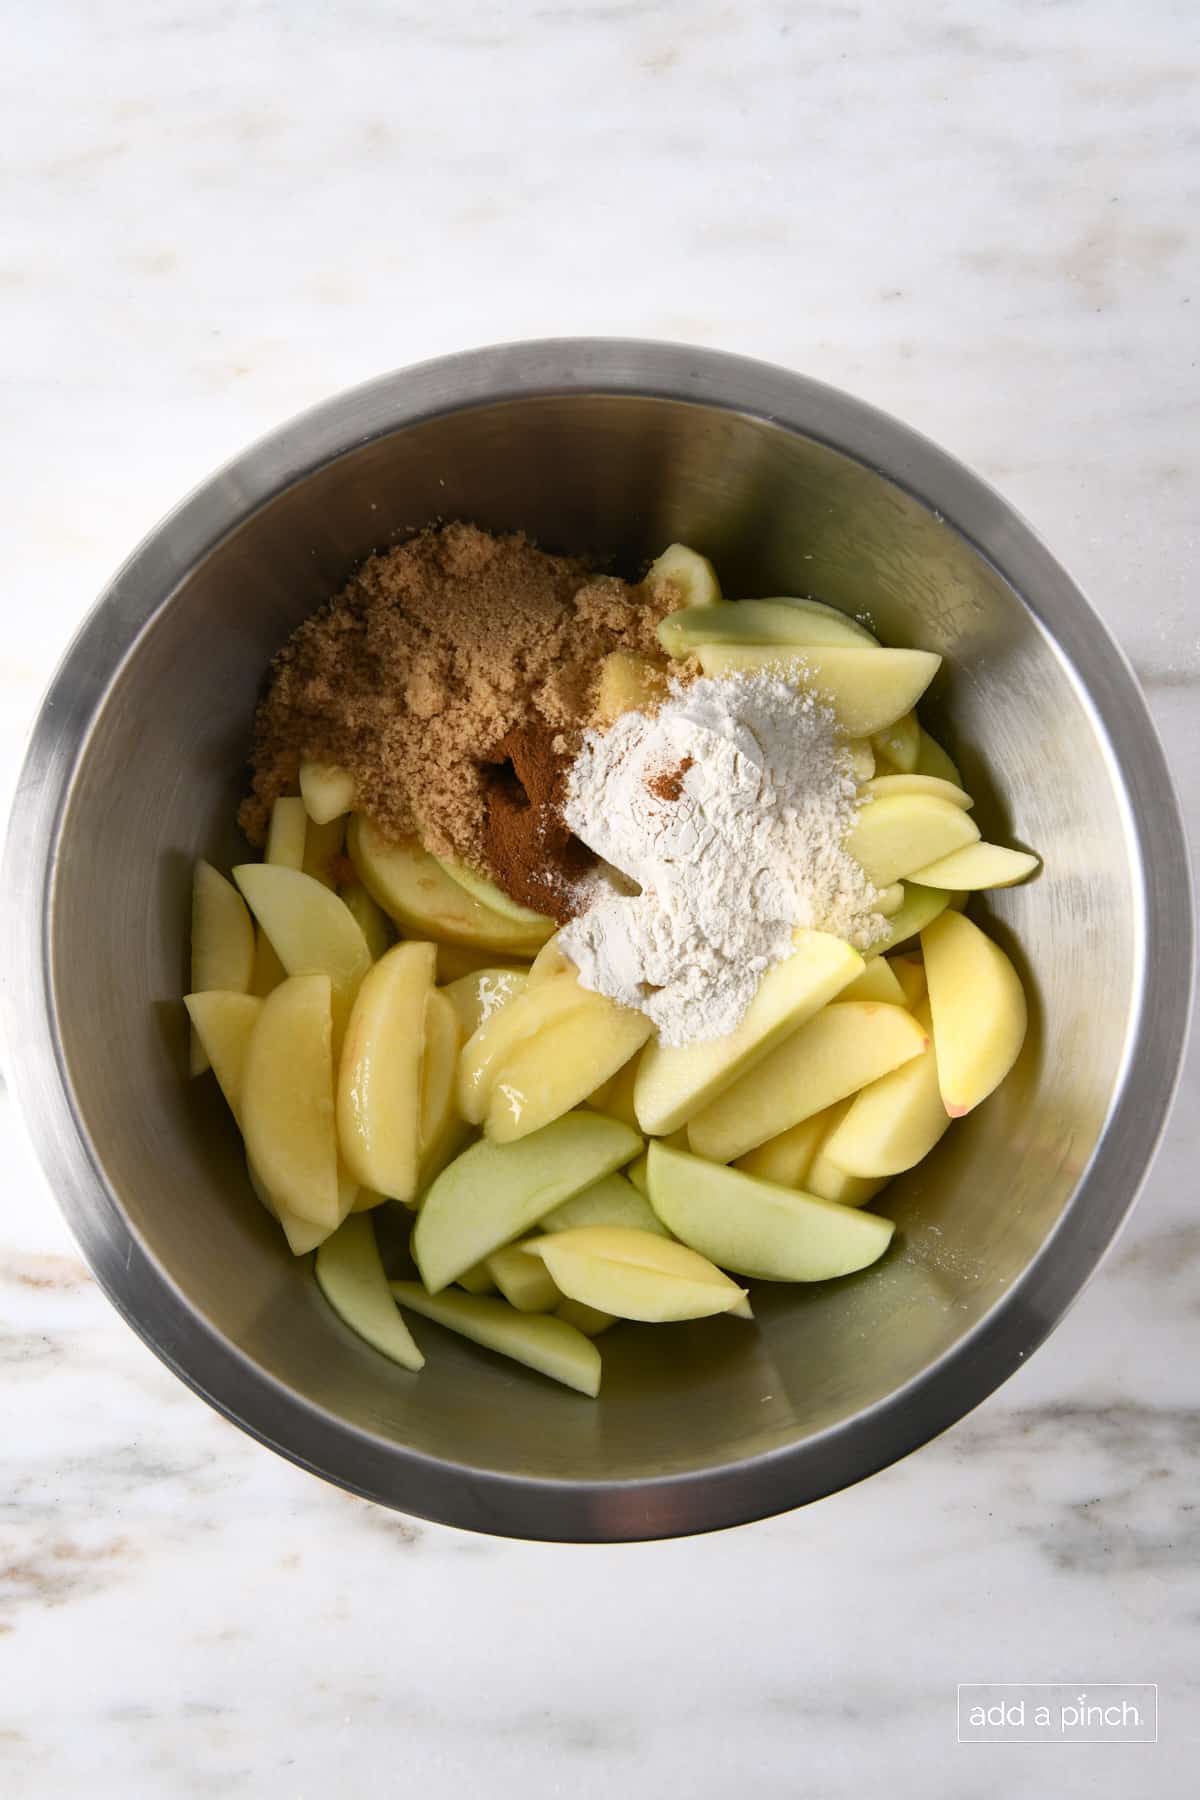 Apple filling ingredients - slices apples, brown sugar, flour, baking powder, cinnamon, salt and lemon juice in stainless mixing bowl.